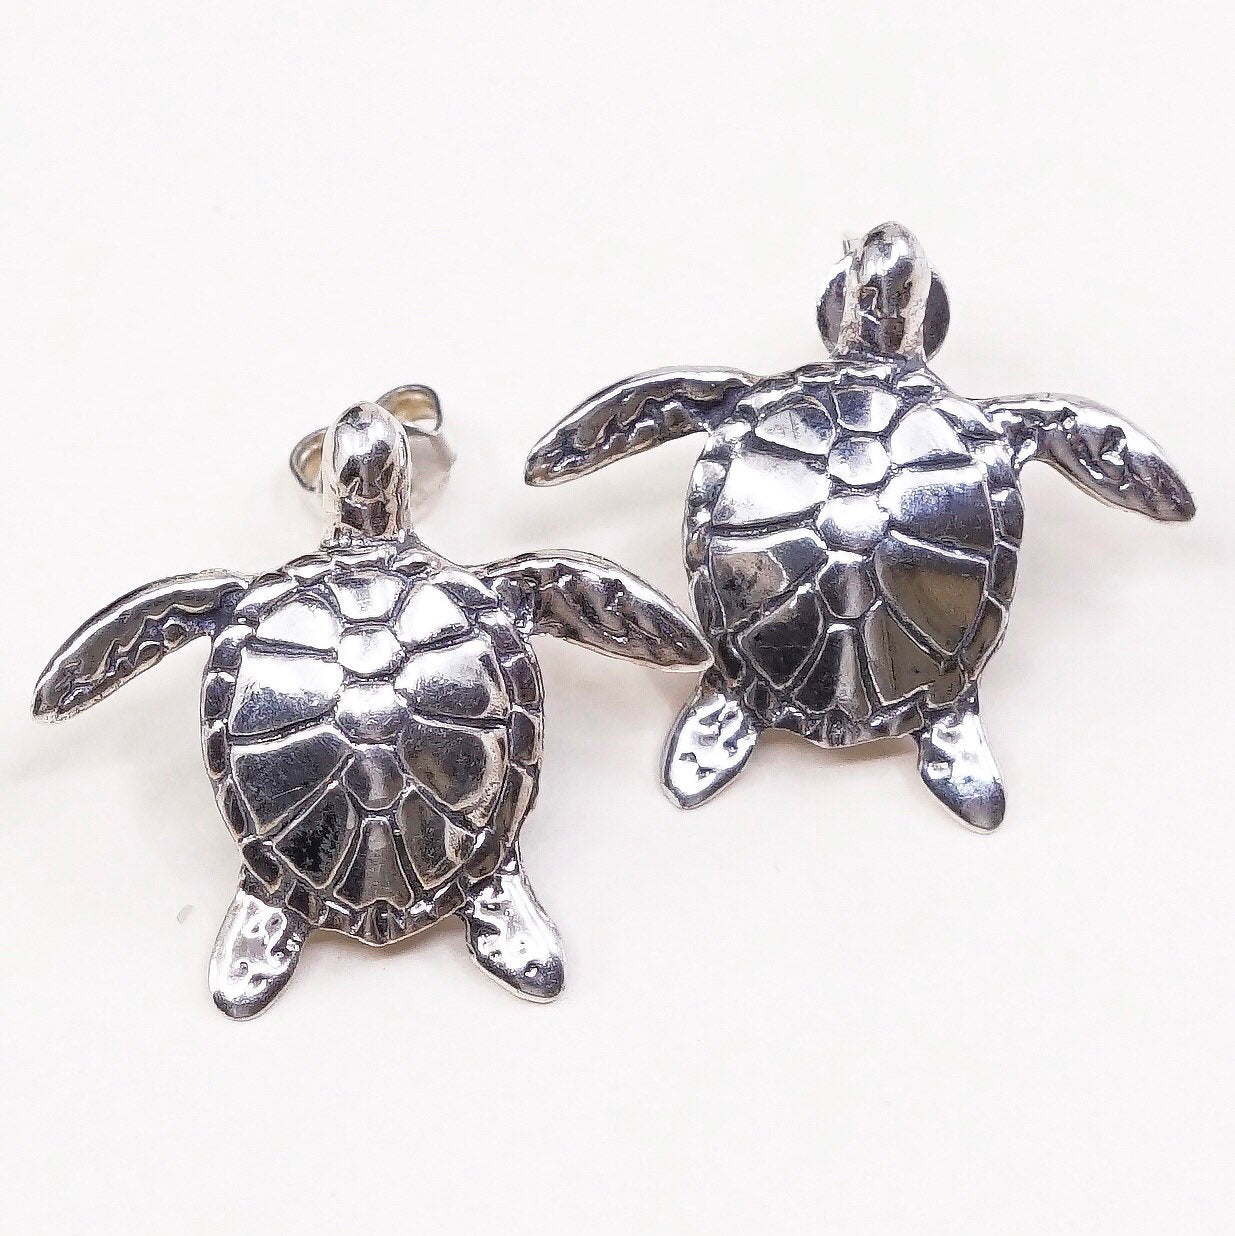 VTG Sterling silver handmade sea turtle studs, earrings, southwestern style